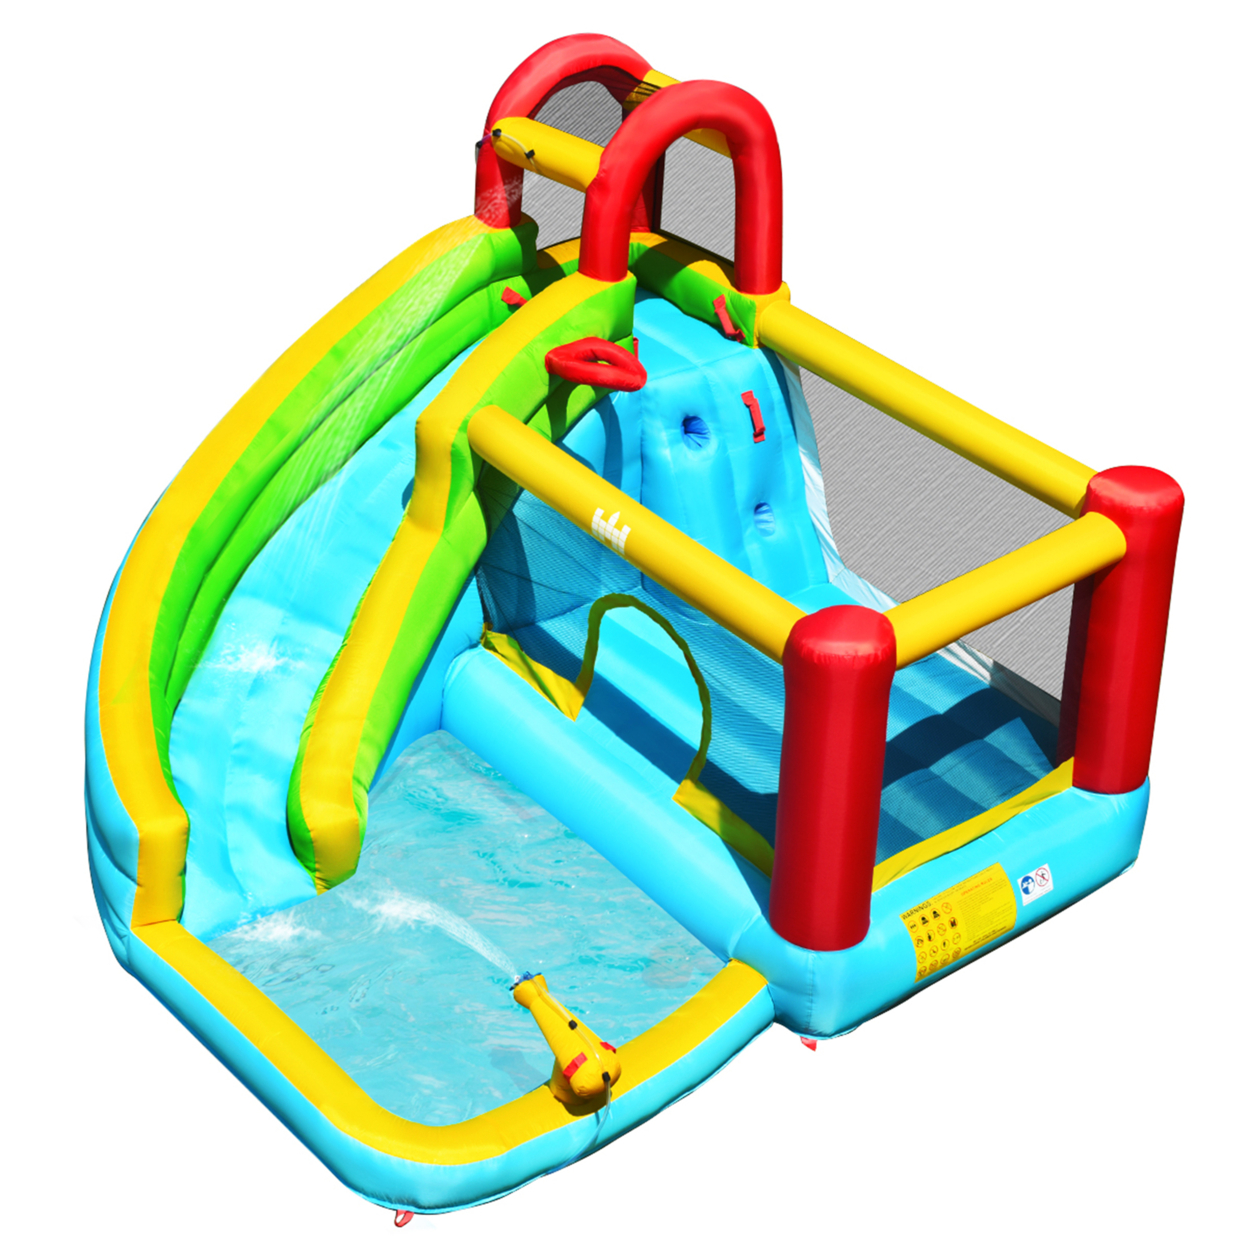 Inflatable Kids Water Slide Jumper Bounce House Splash Water Pool W/ 735W Blower